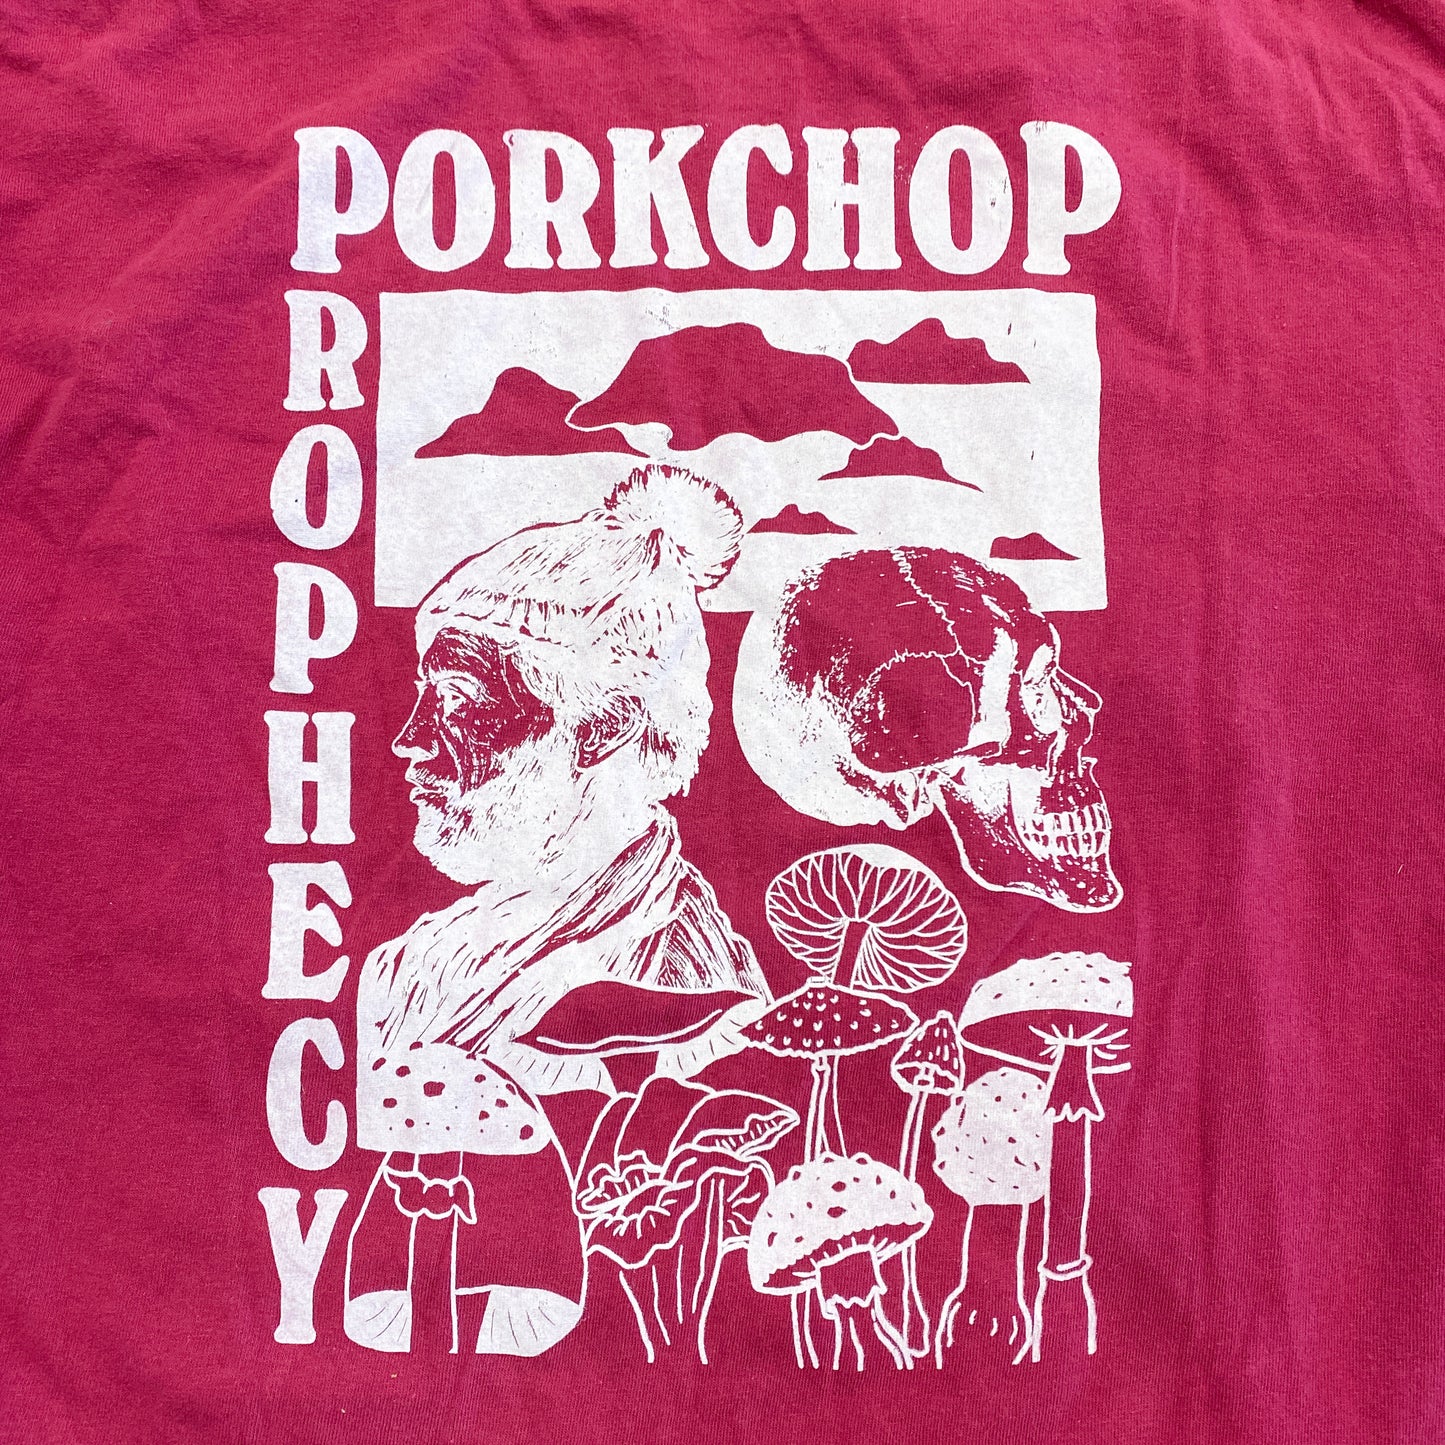 Porkchop Prophecy Long Sleeve Shirts